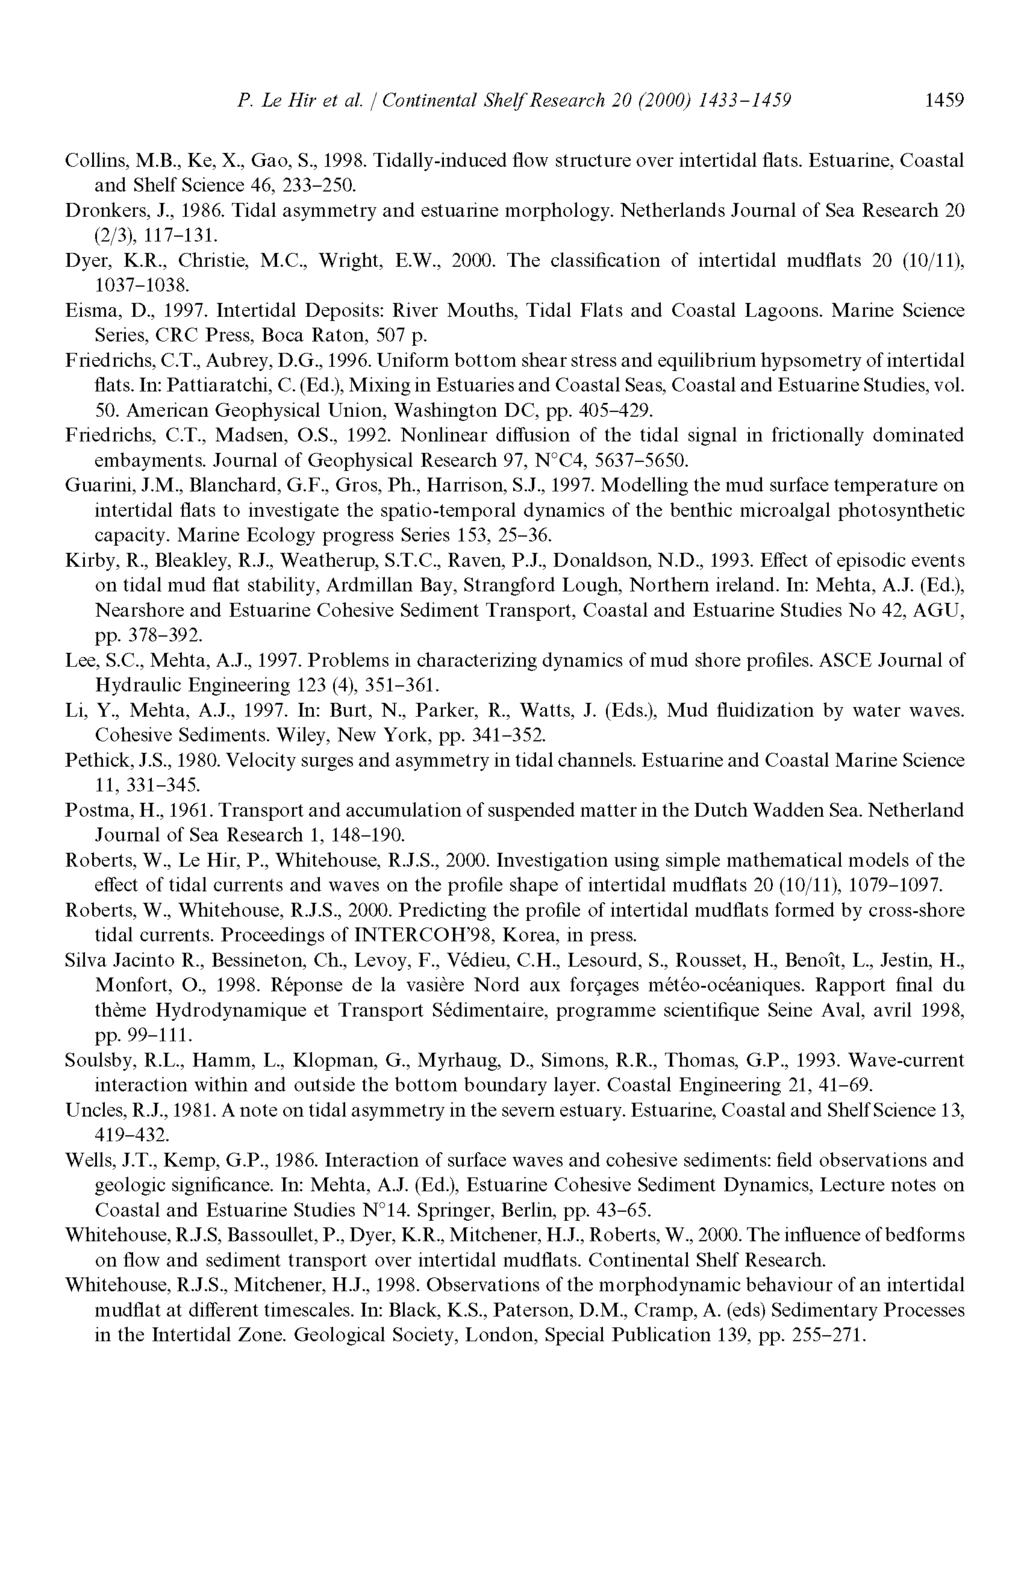 P. Le Hir et al. Continental Shelf Research 20 (2000) 1433-1459 1459 Collins, M.B., Ke, X., Gao, S., 1998. Tidally-induced flow structure over intertidal flats.